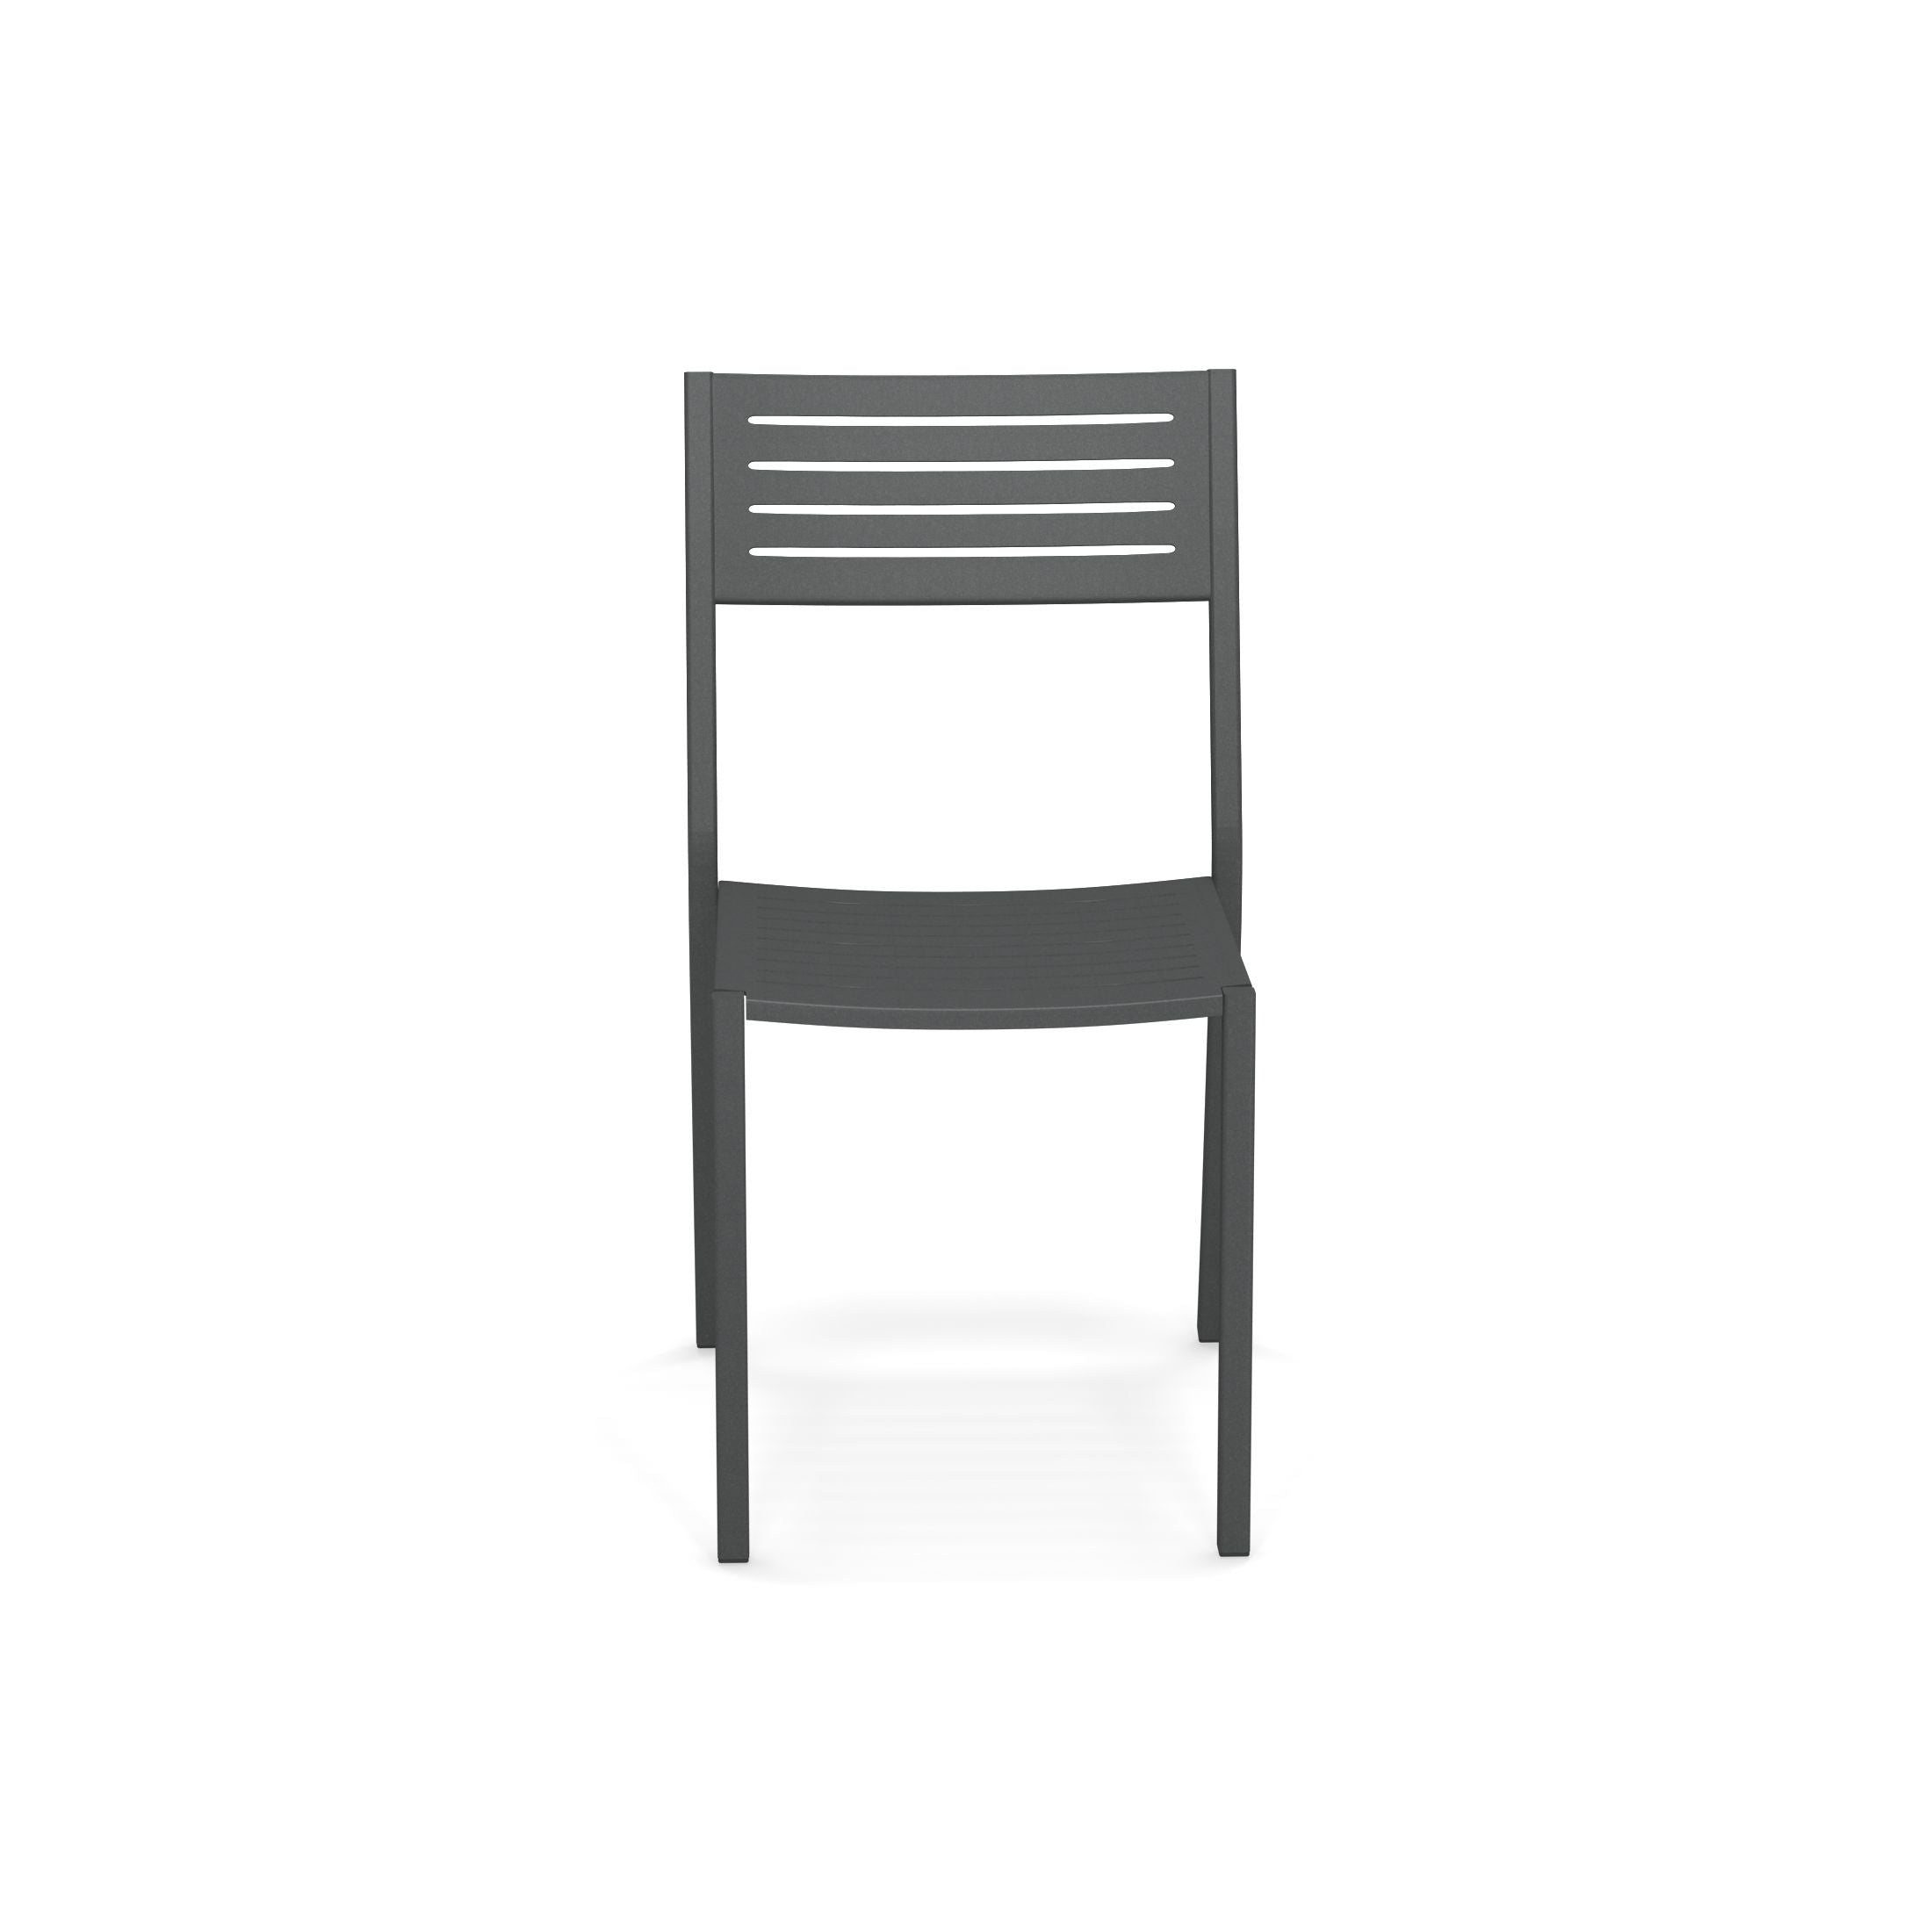 EMU Segno Chair [Set of 4]